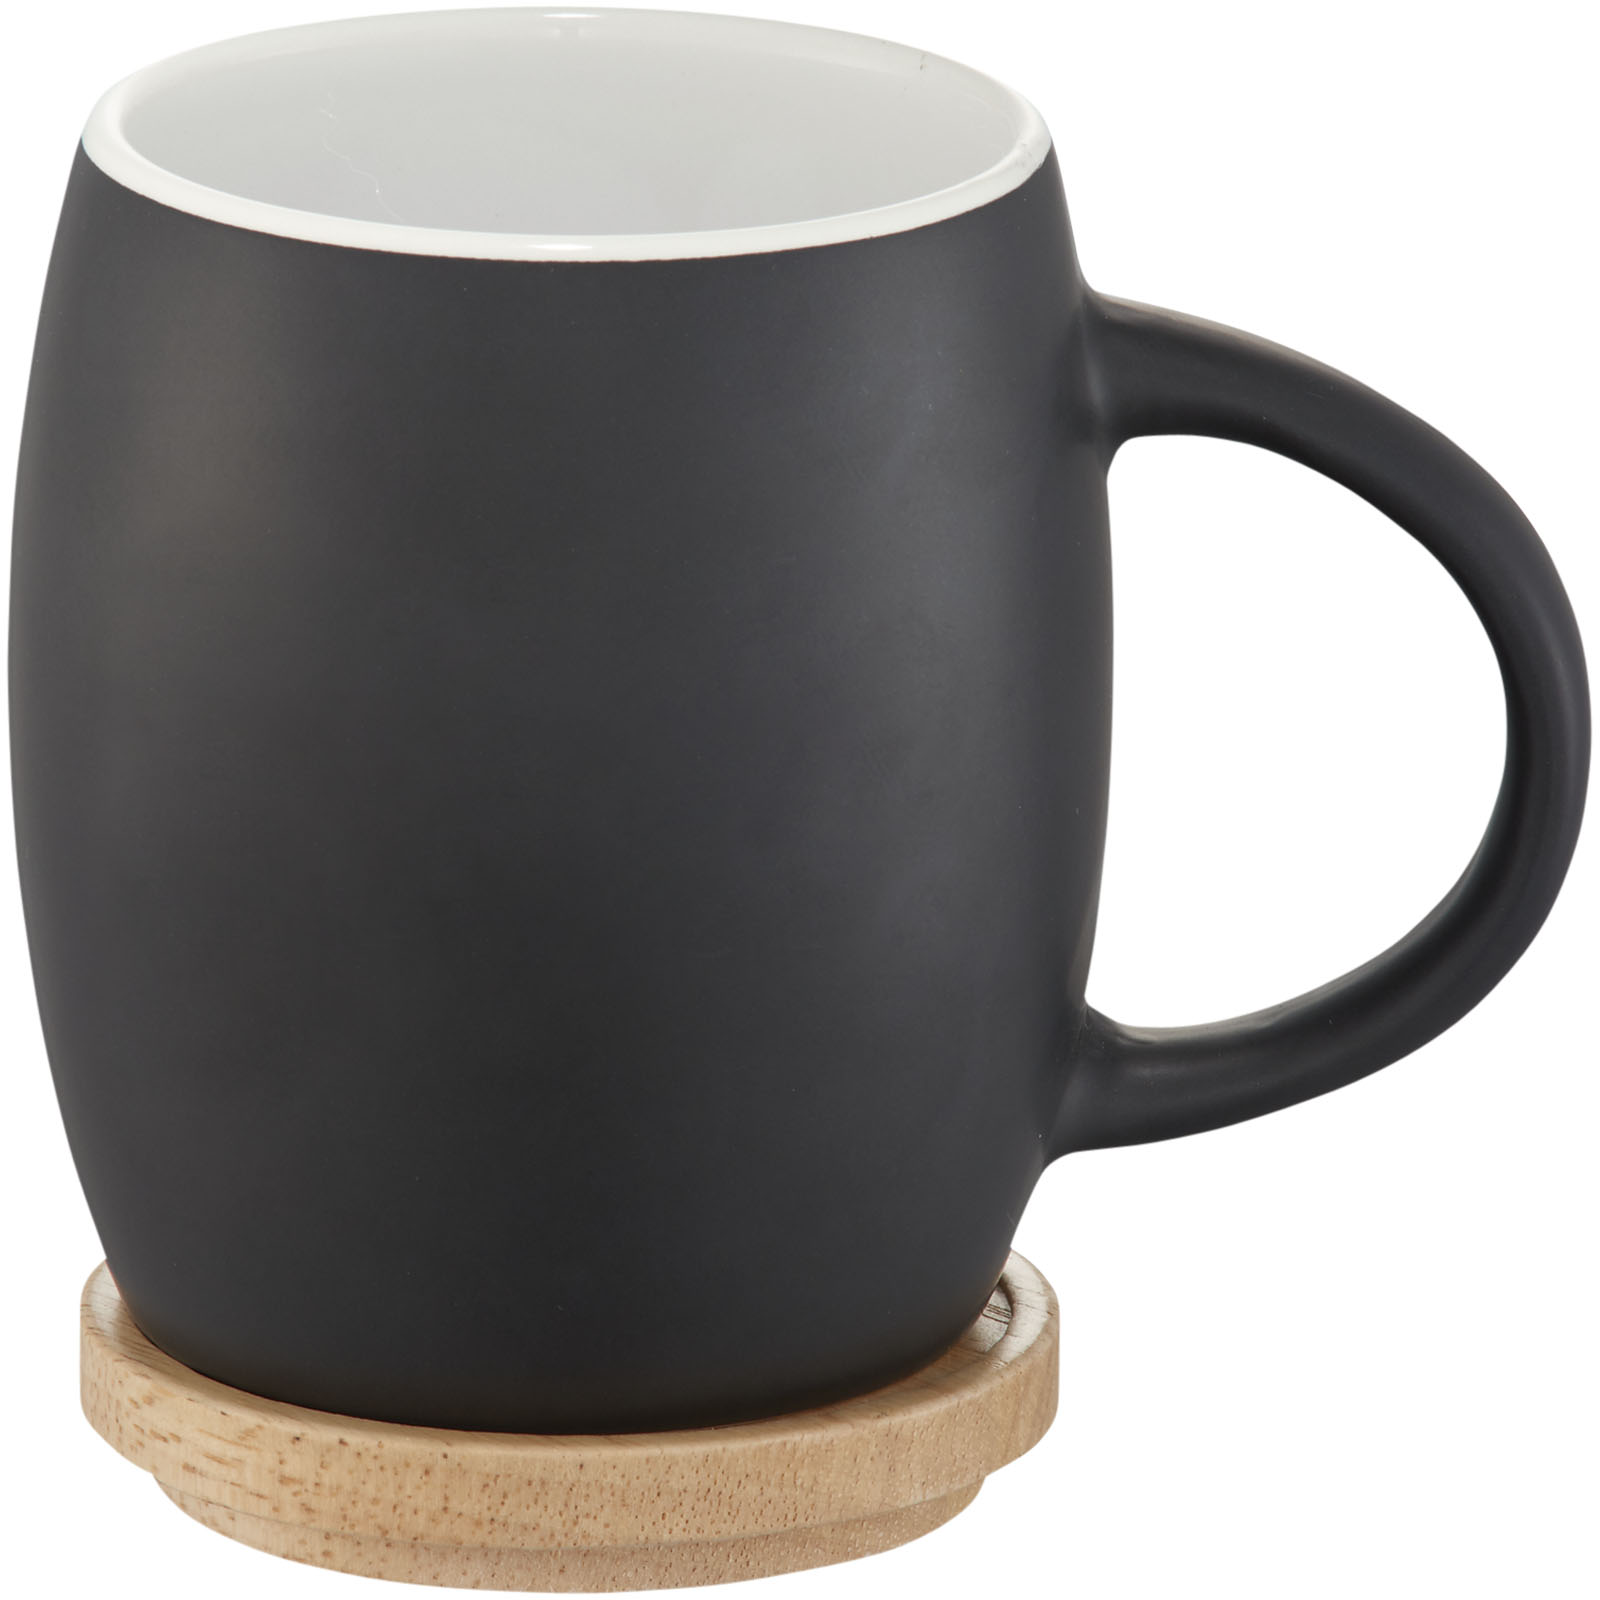 Drinkware - Hearth 400 ml ceramic mug with wooden coaster